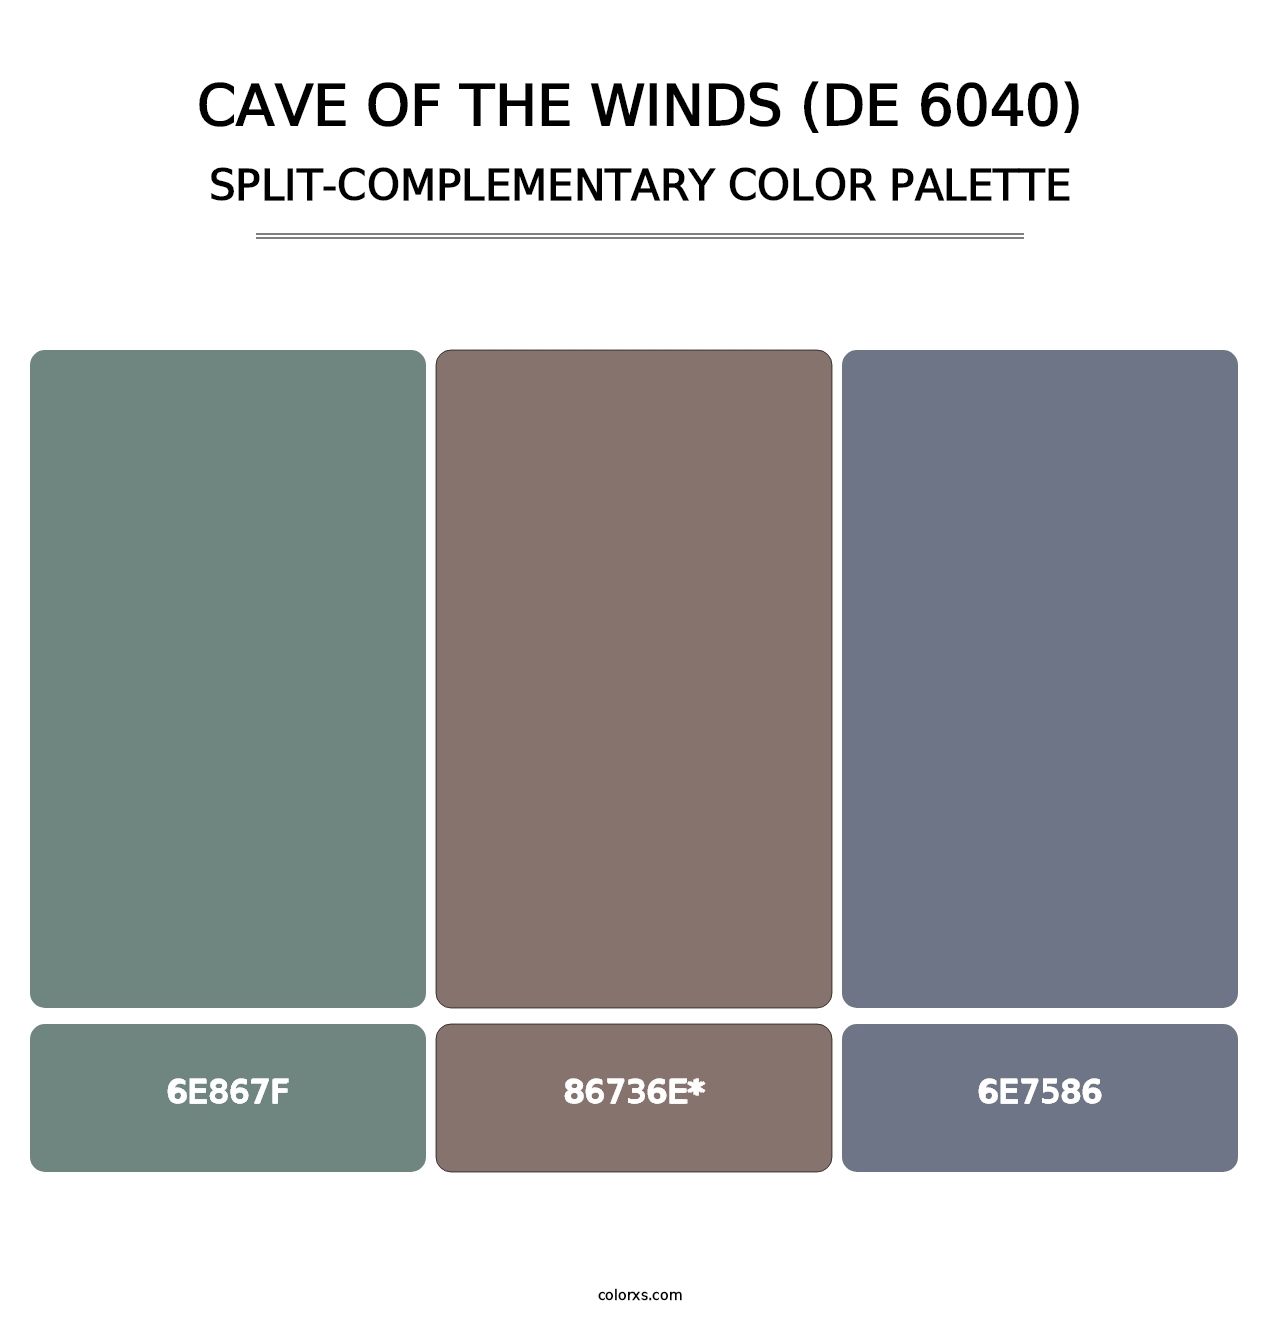 Cave of the Winds (DE 6040) - Split-Complementary Color Palette